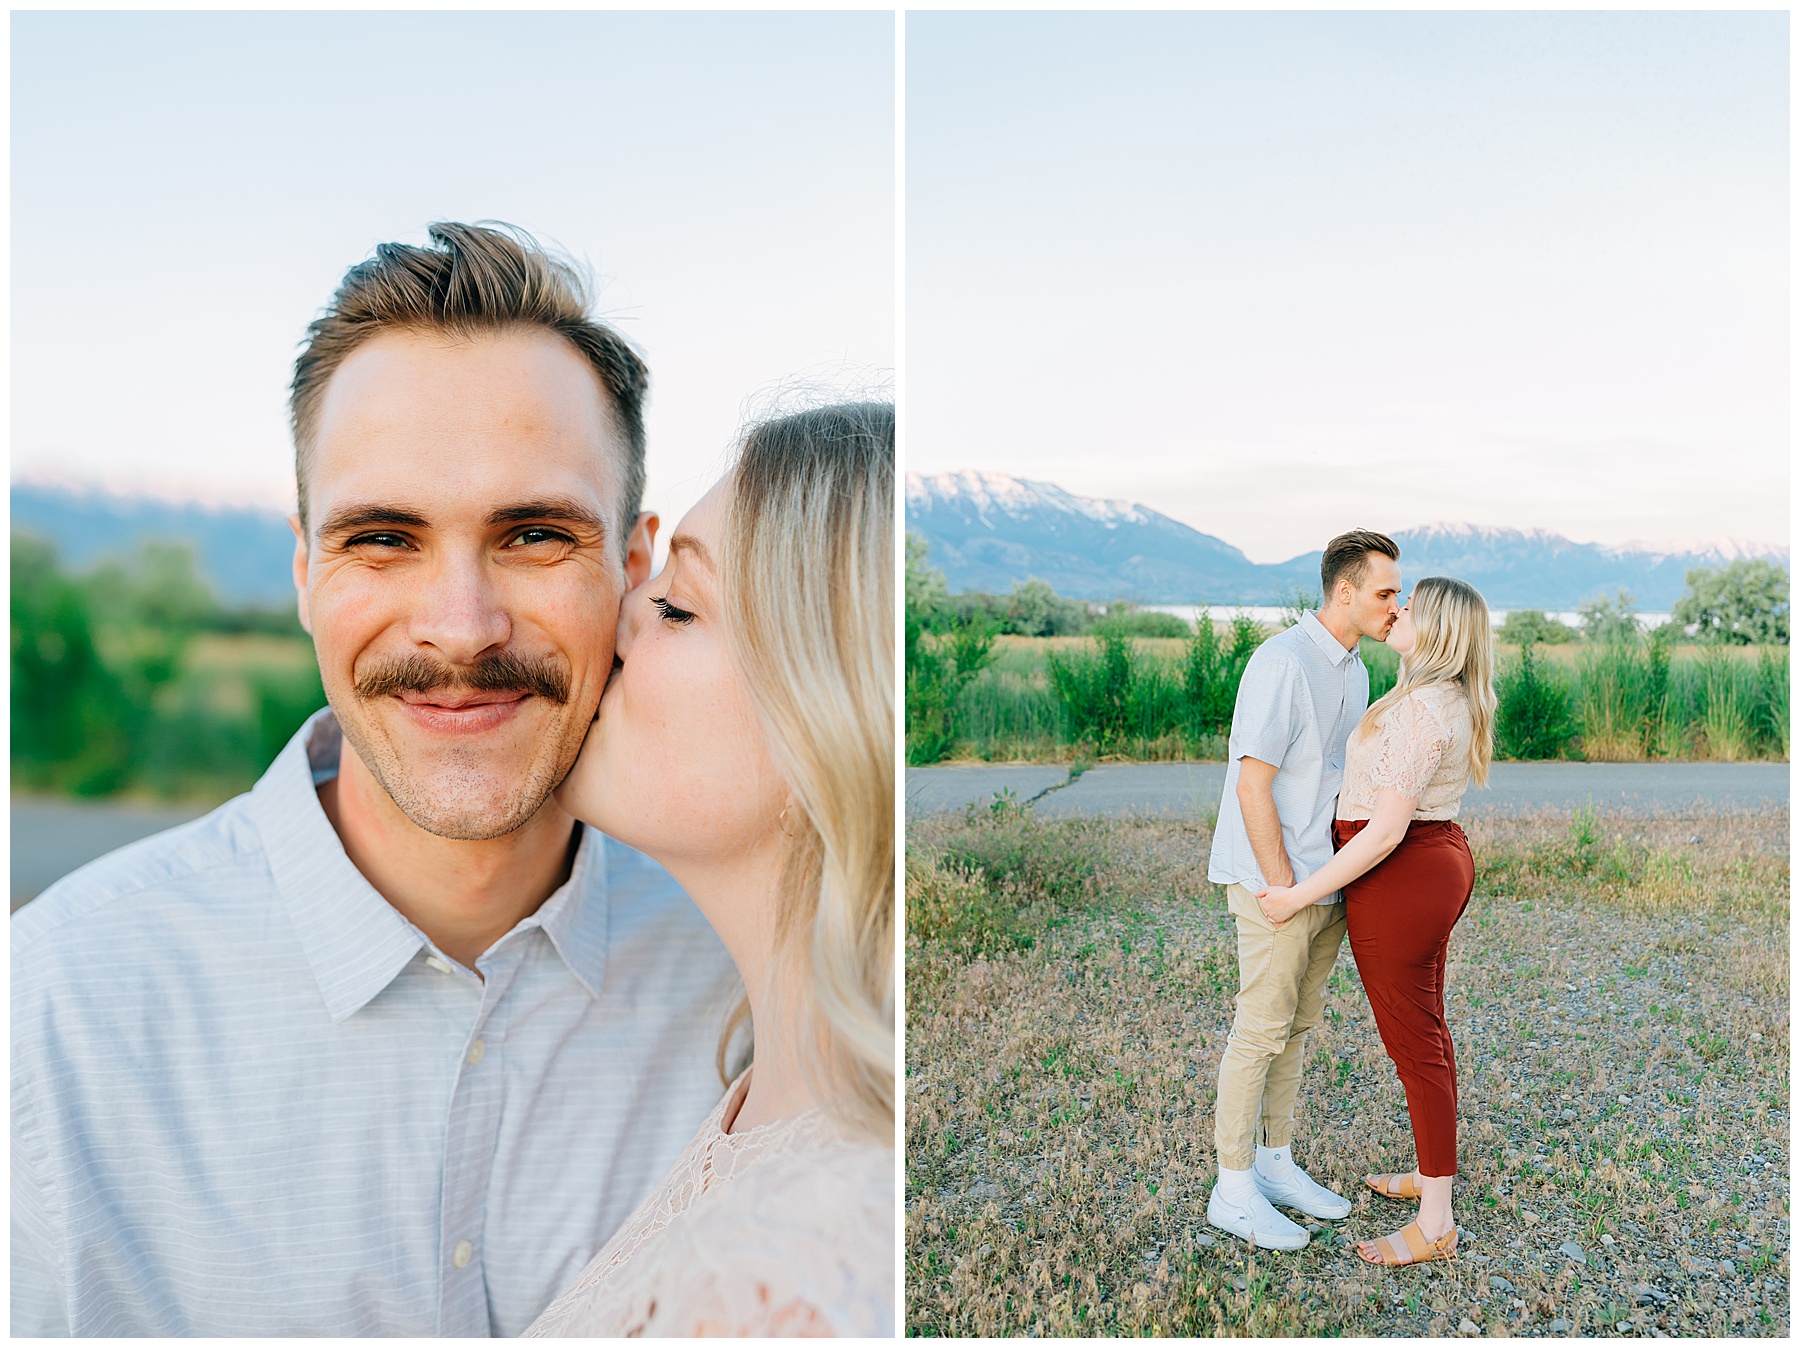 Amy + Parker | Saratoga Springs Engagement Session | Utah Wedding Photographer